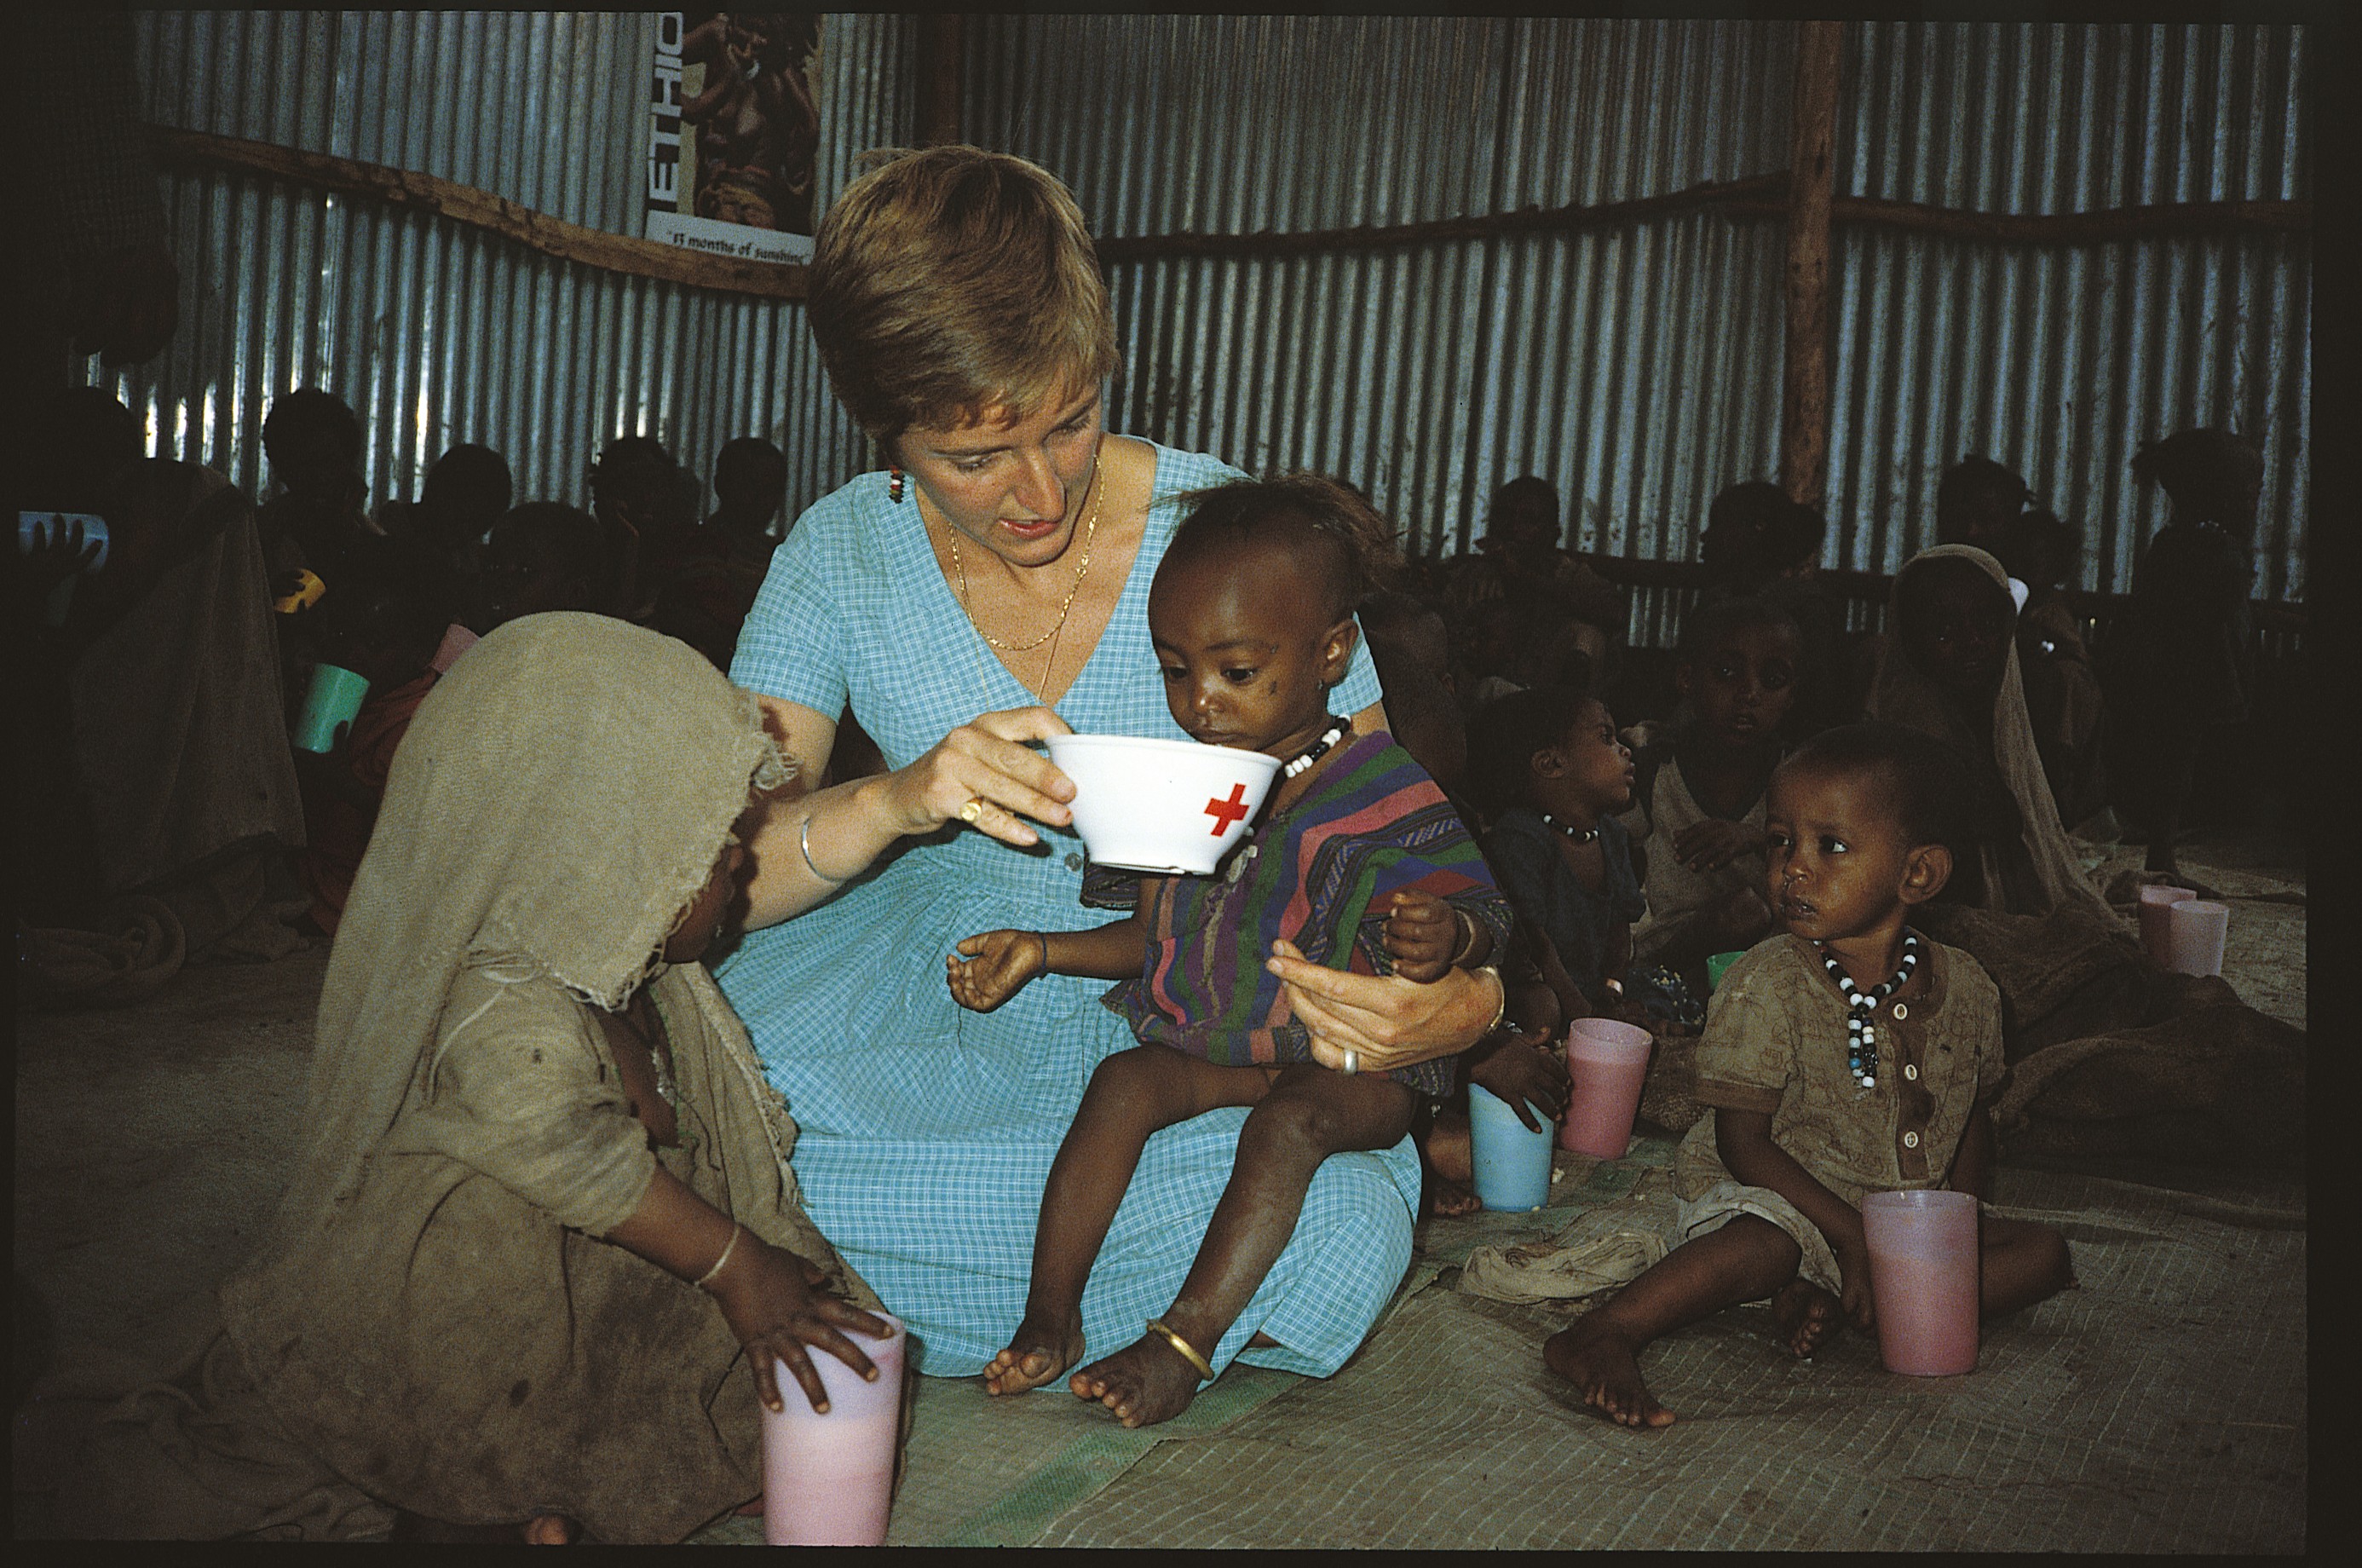 Caption: Claire Bertschinger feeding Ethiopian child. Credit: Claire Bertschinger